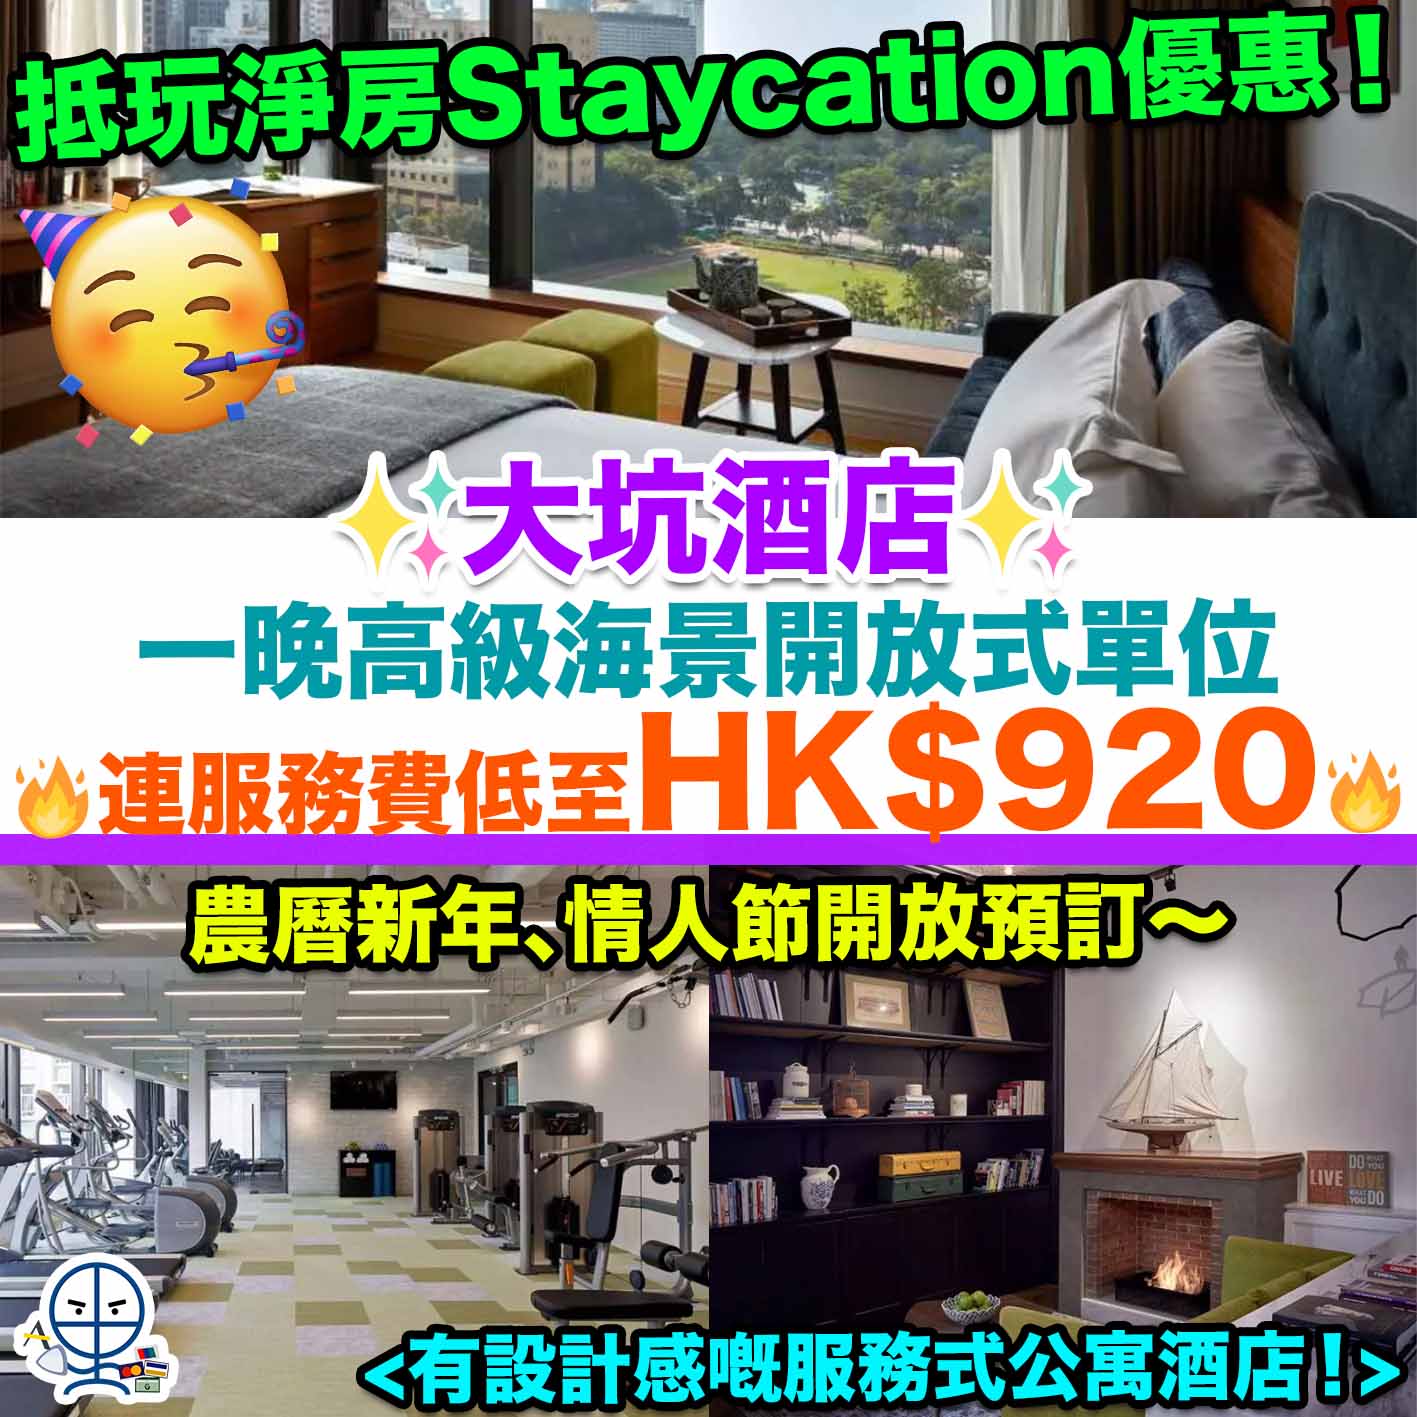 Little Tai Hang Hotel-staycation-大坑酒店 Little Tai Hang住宿優惠-香港酒店staycation